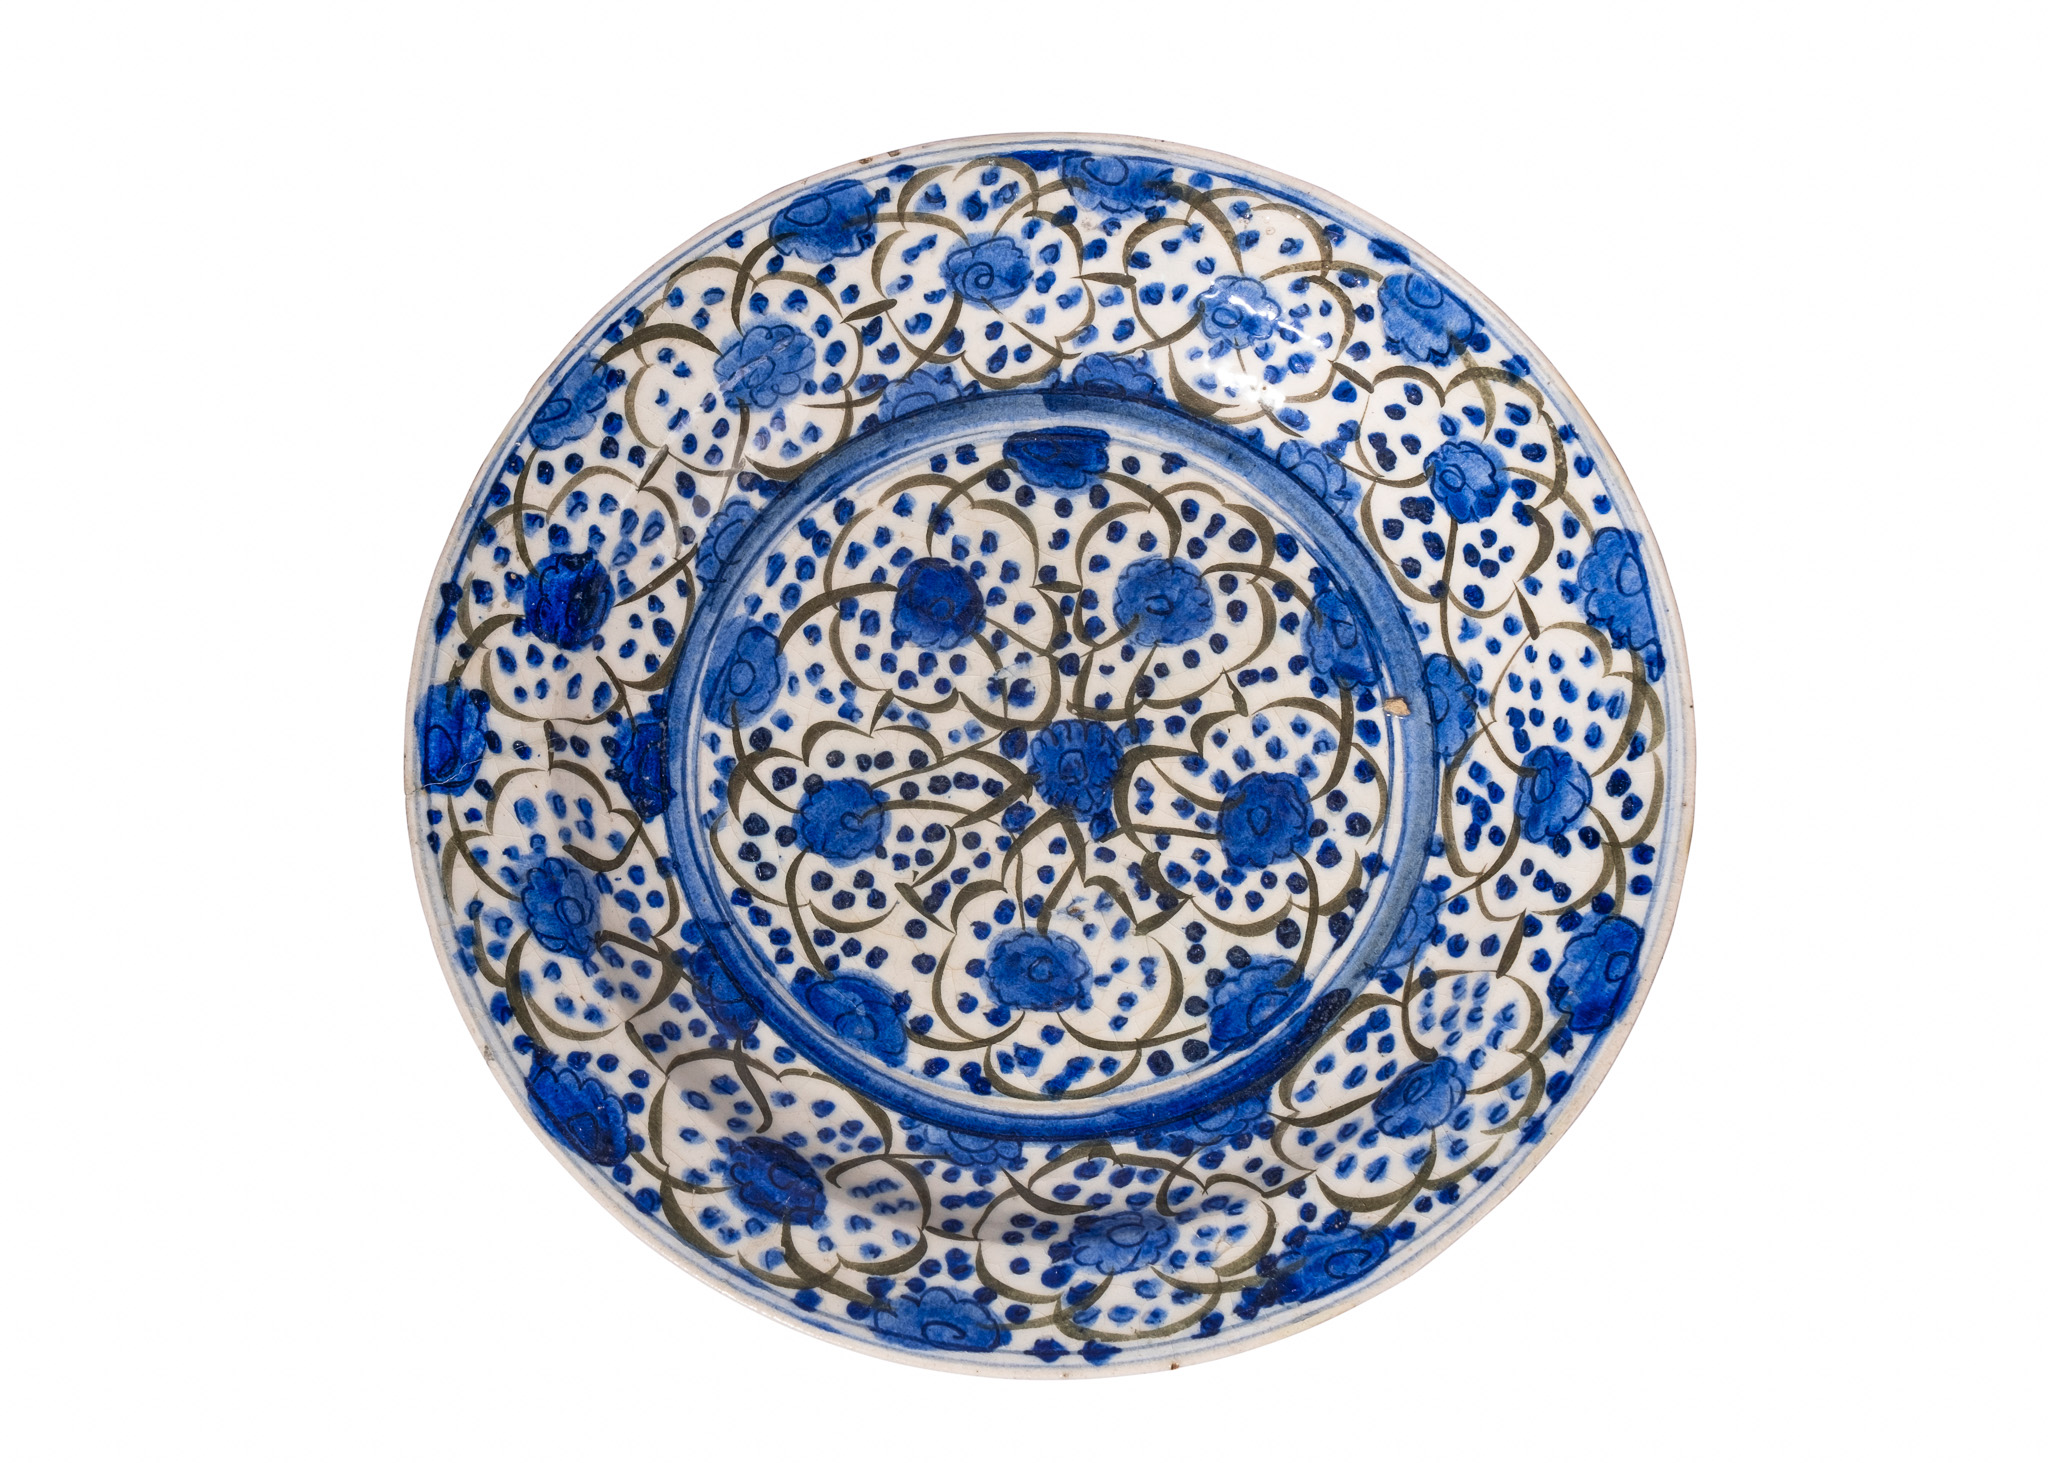 A SAFAVID BLACK, BLUE AND WHITE "KUBACHI" POTTERY DISH PROBABLY TABRIZ, IRAN, EARLY 17TH CENTURY